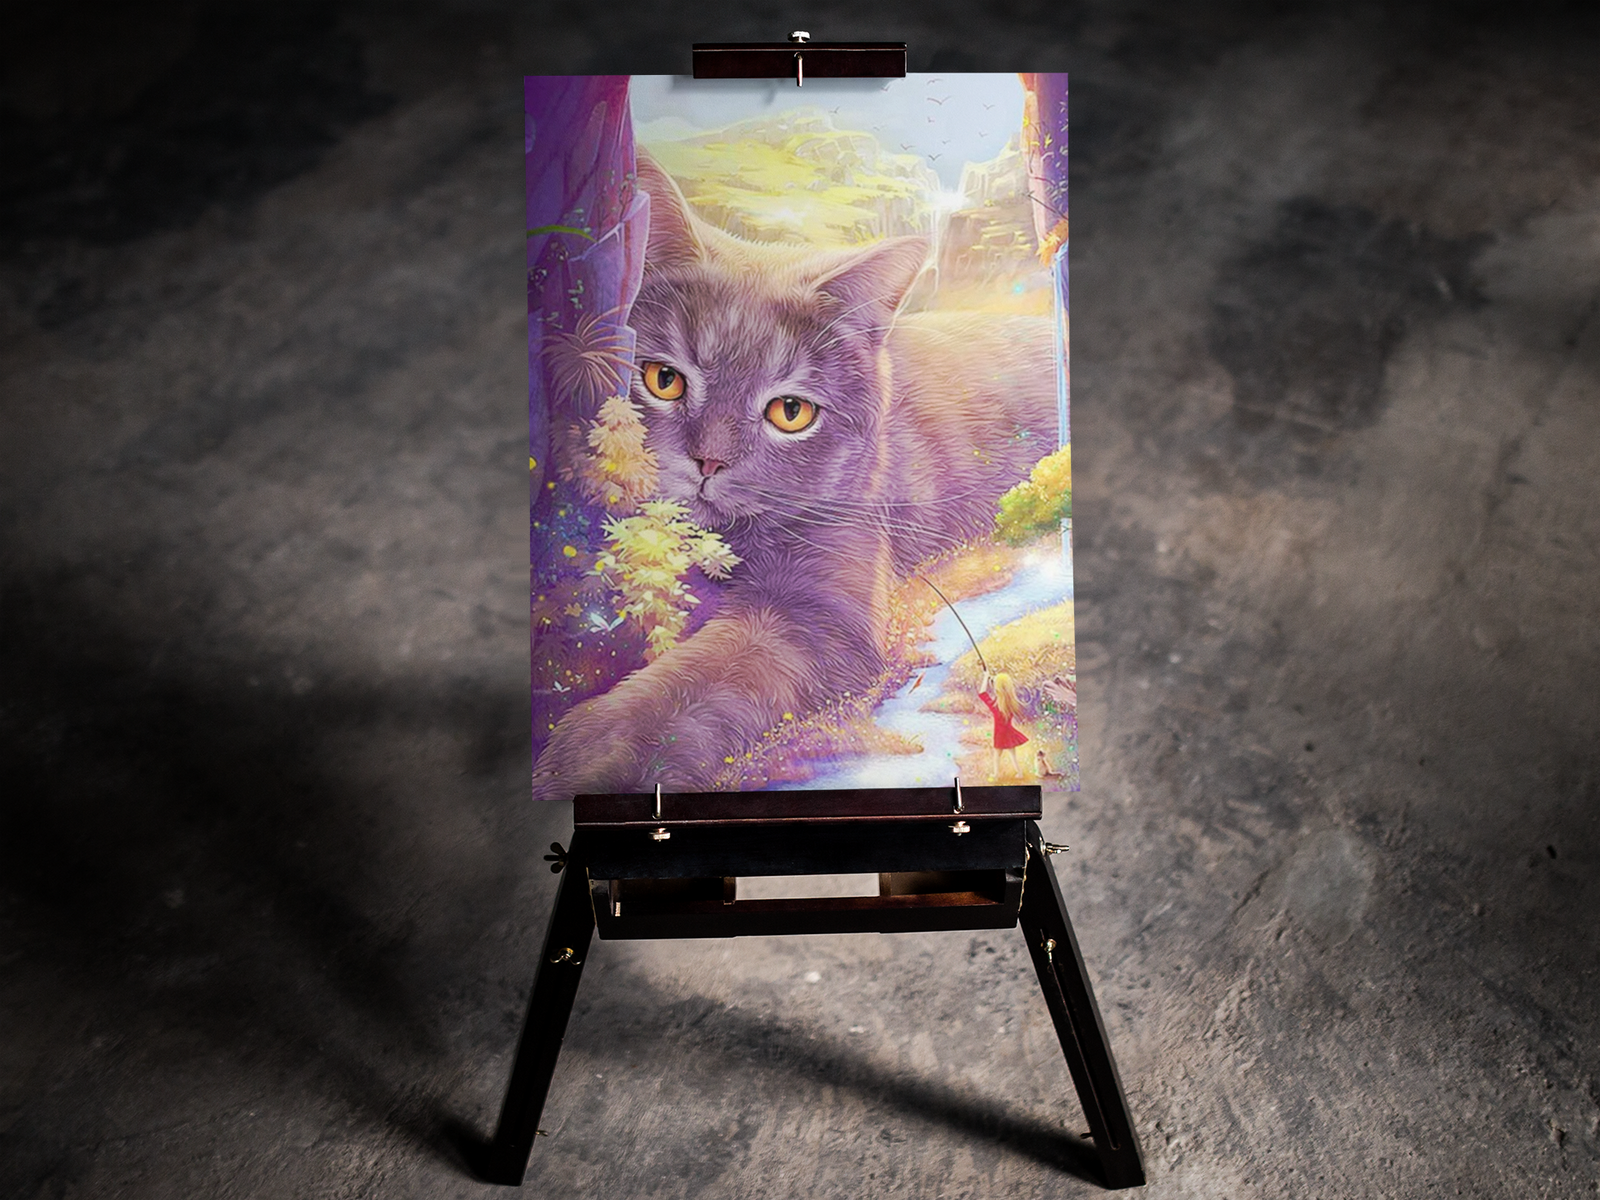 Large Cat by a River 5D Diamond Art Kit